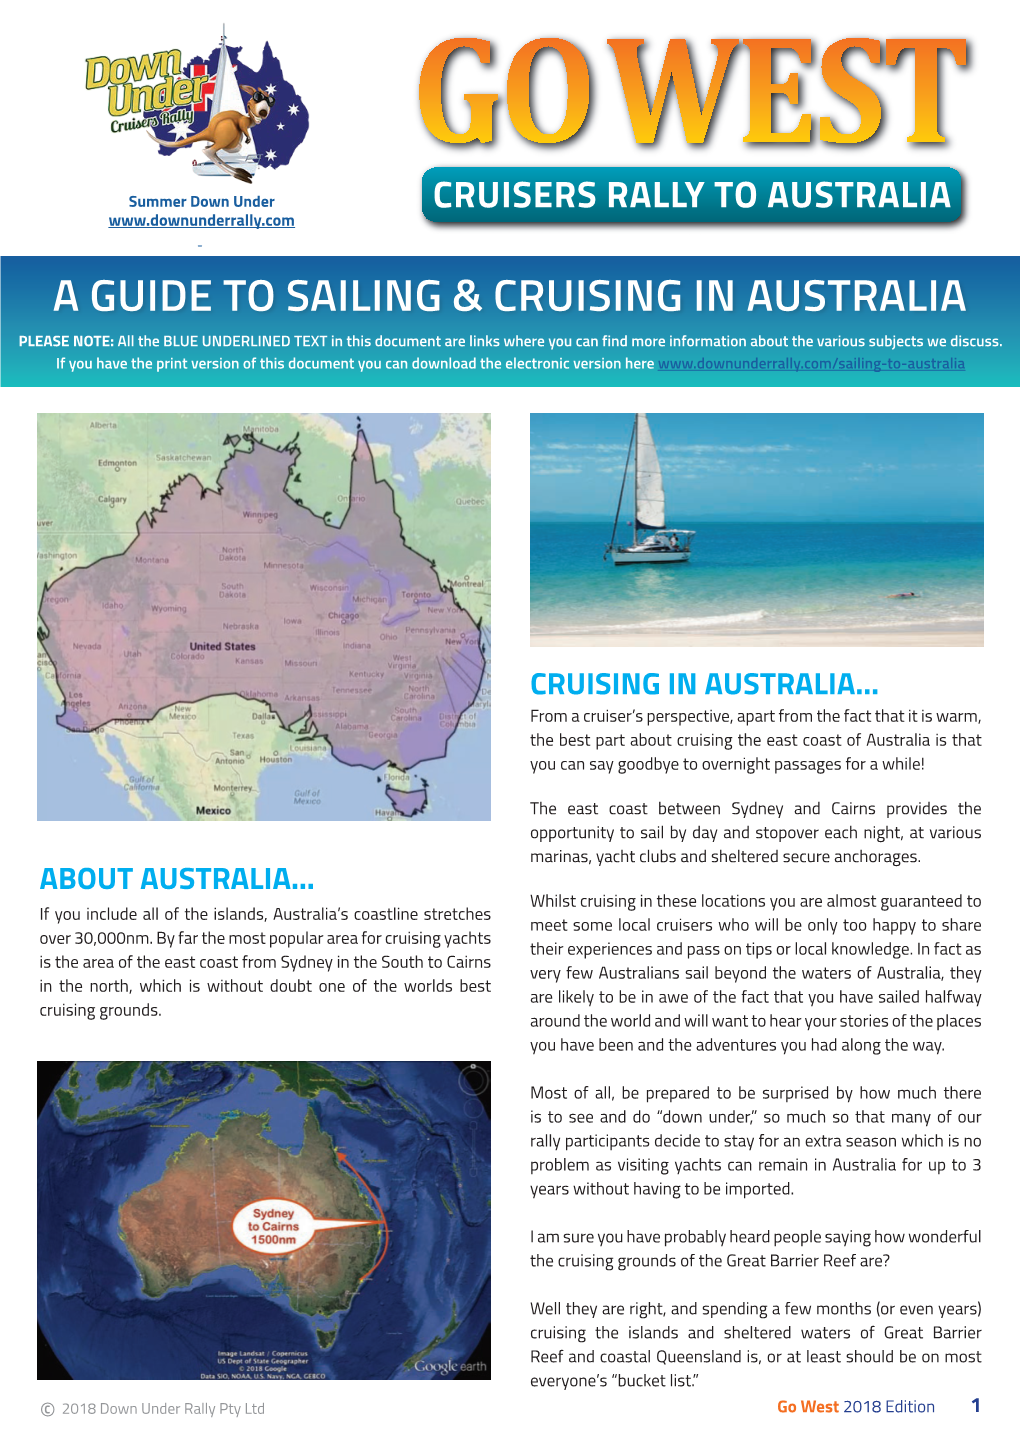 A Guide to Sailing & Cruising in Australia